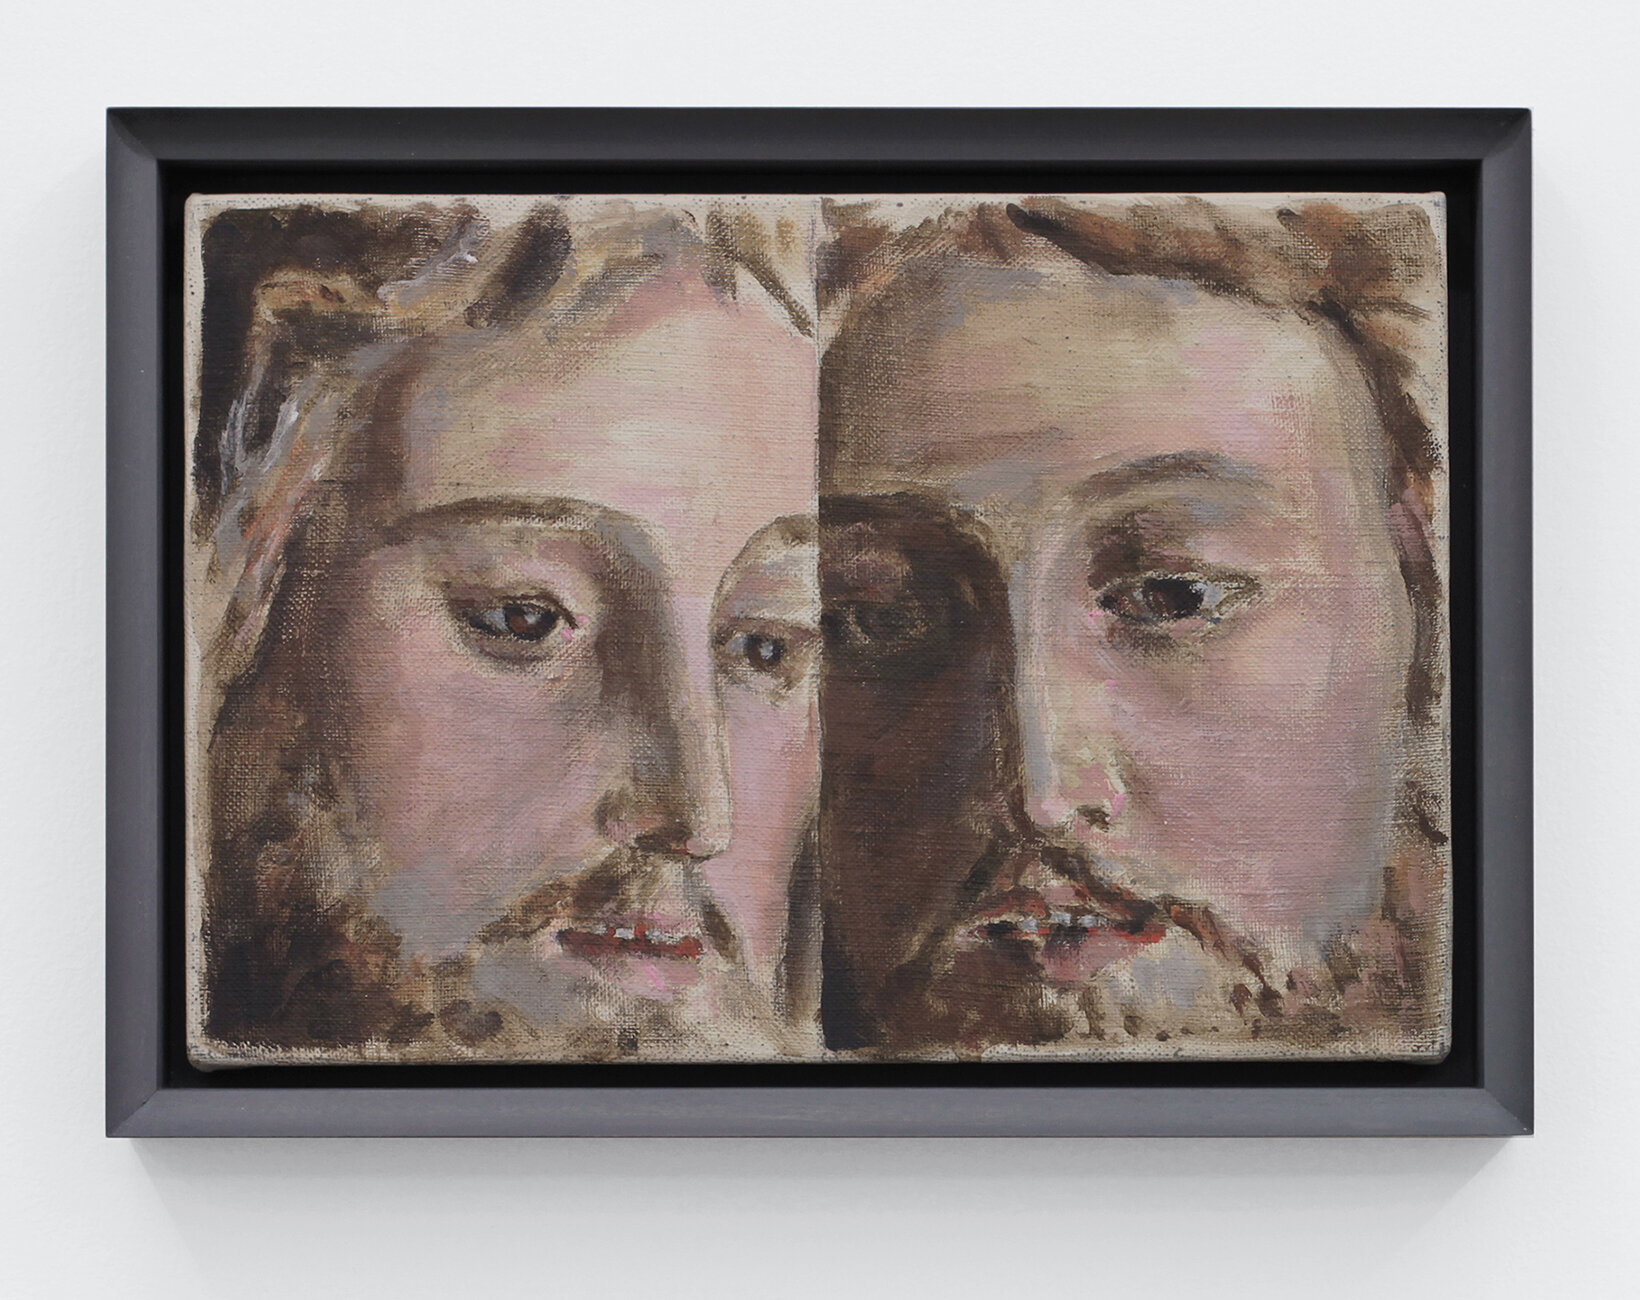  Ebay Jesus (Two Views)  2018  Distemper on canvas  7 x 9.5 inches  (17.78 x 24.13 cm)     